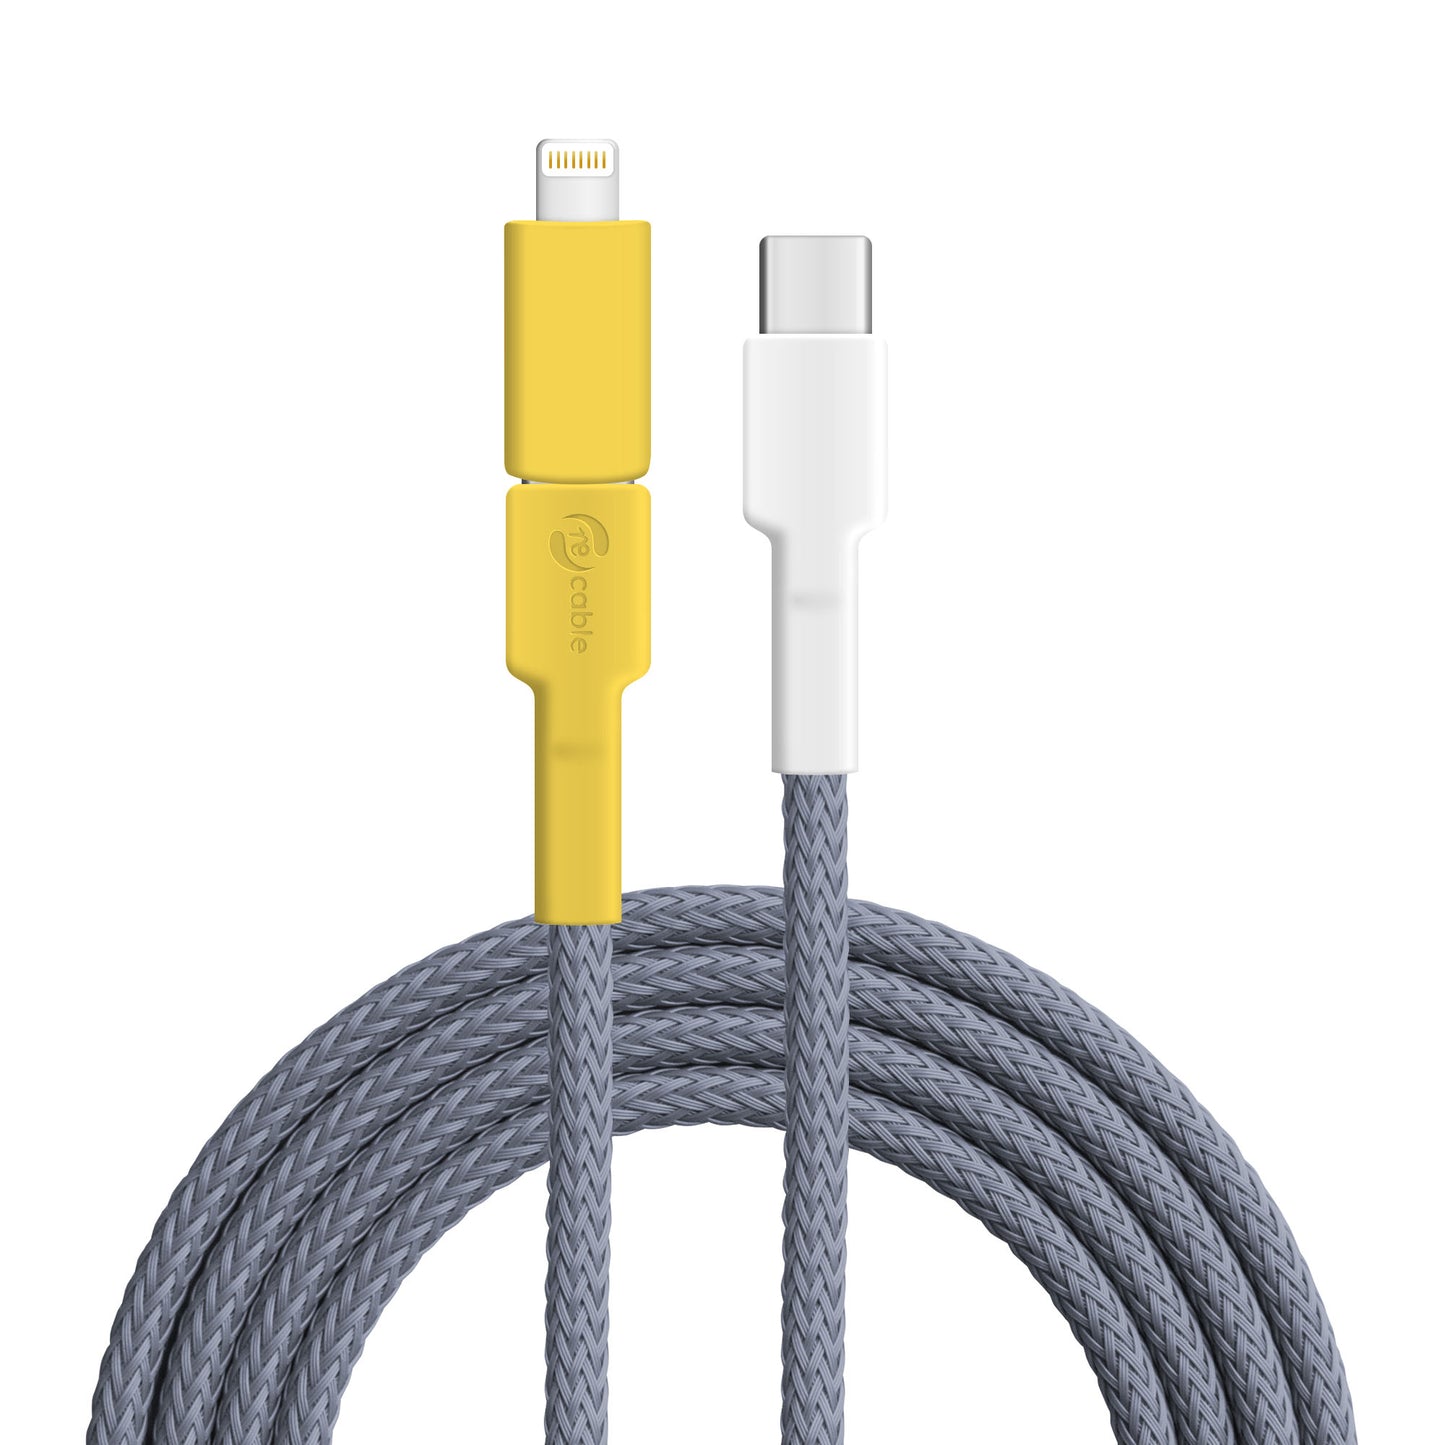 USB-Kabel, Design: Gelbkehlvireo, Anschlüsse: USB C auf USB C mit Lightning Adapter (verbunden)